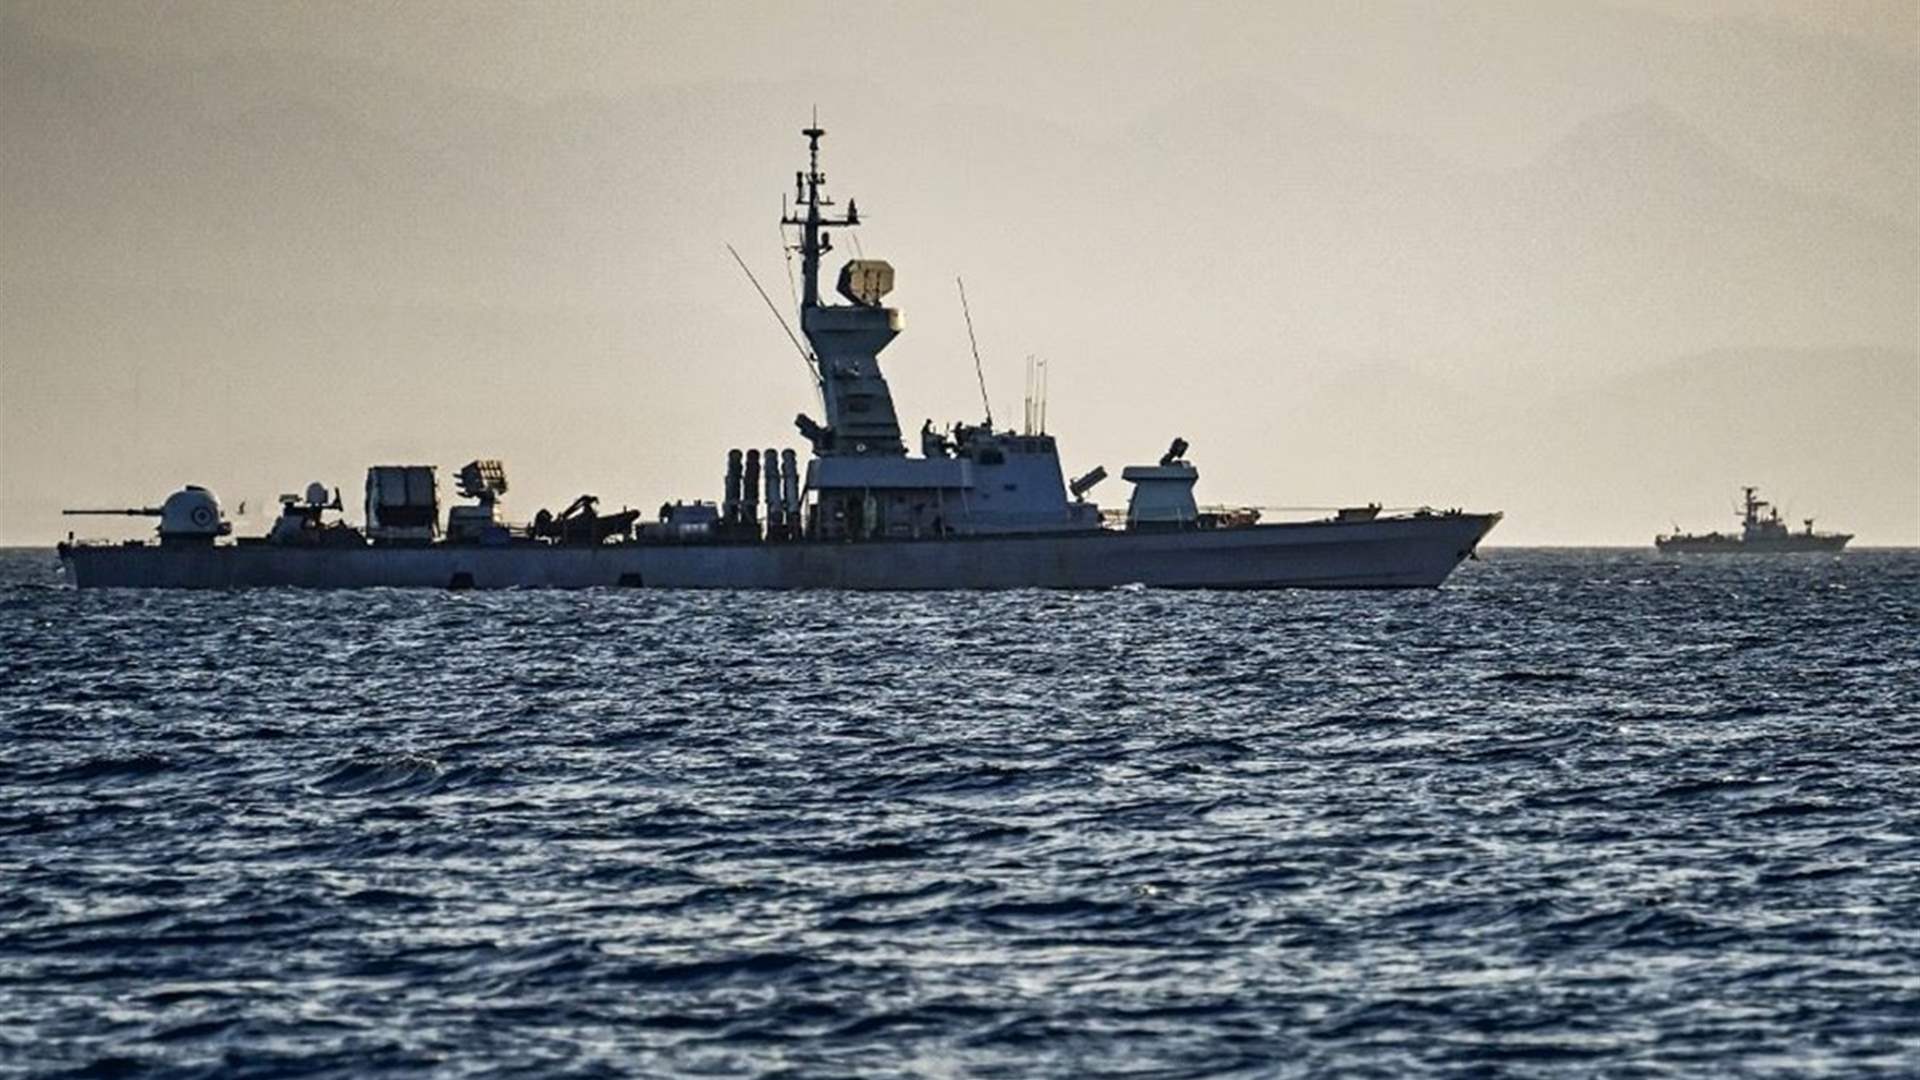 United Kingdom Maritime Trade Operations receives report on incident off Hudaydah, Yemen 